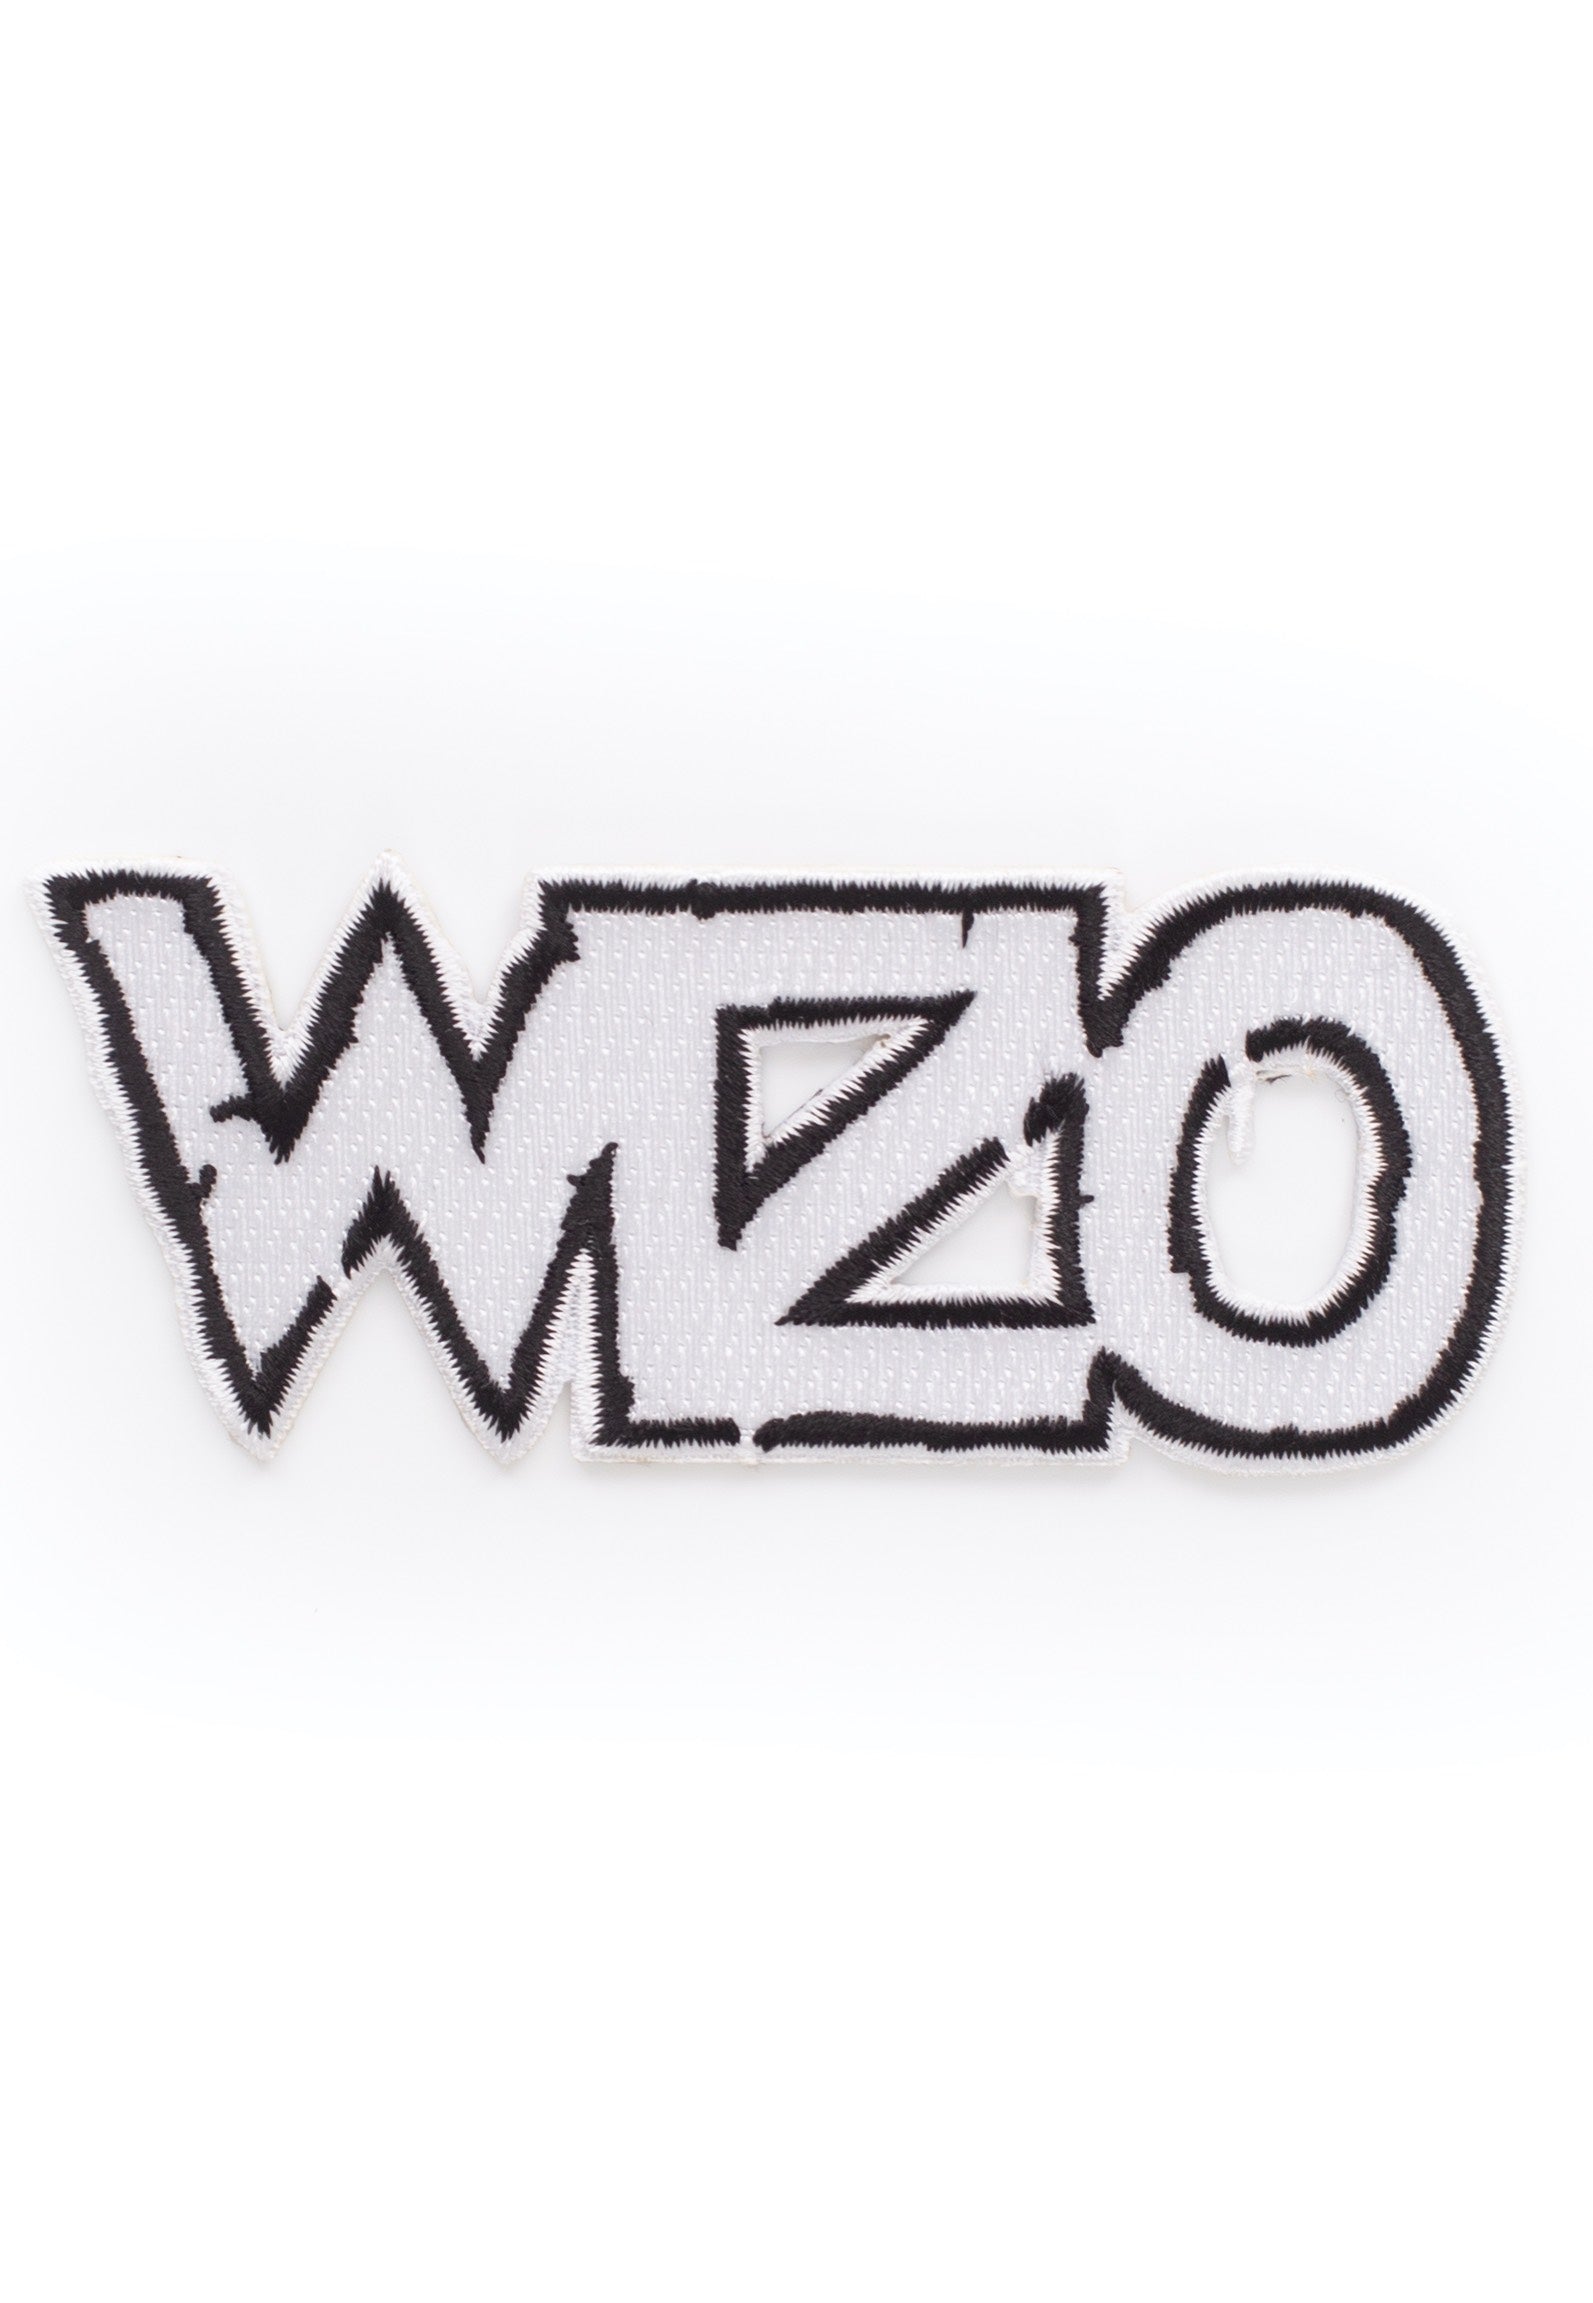 WIZO - Schriftzug - Patch